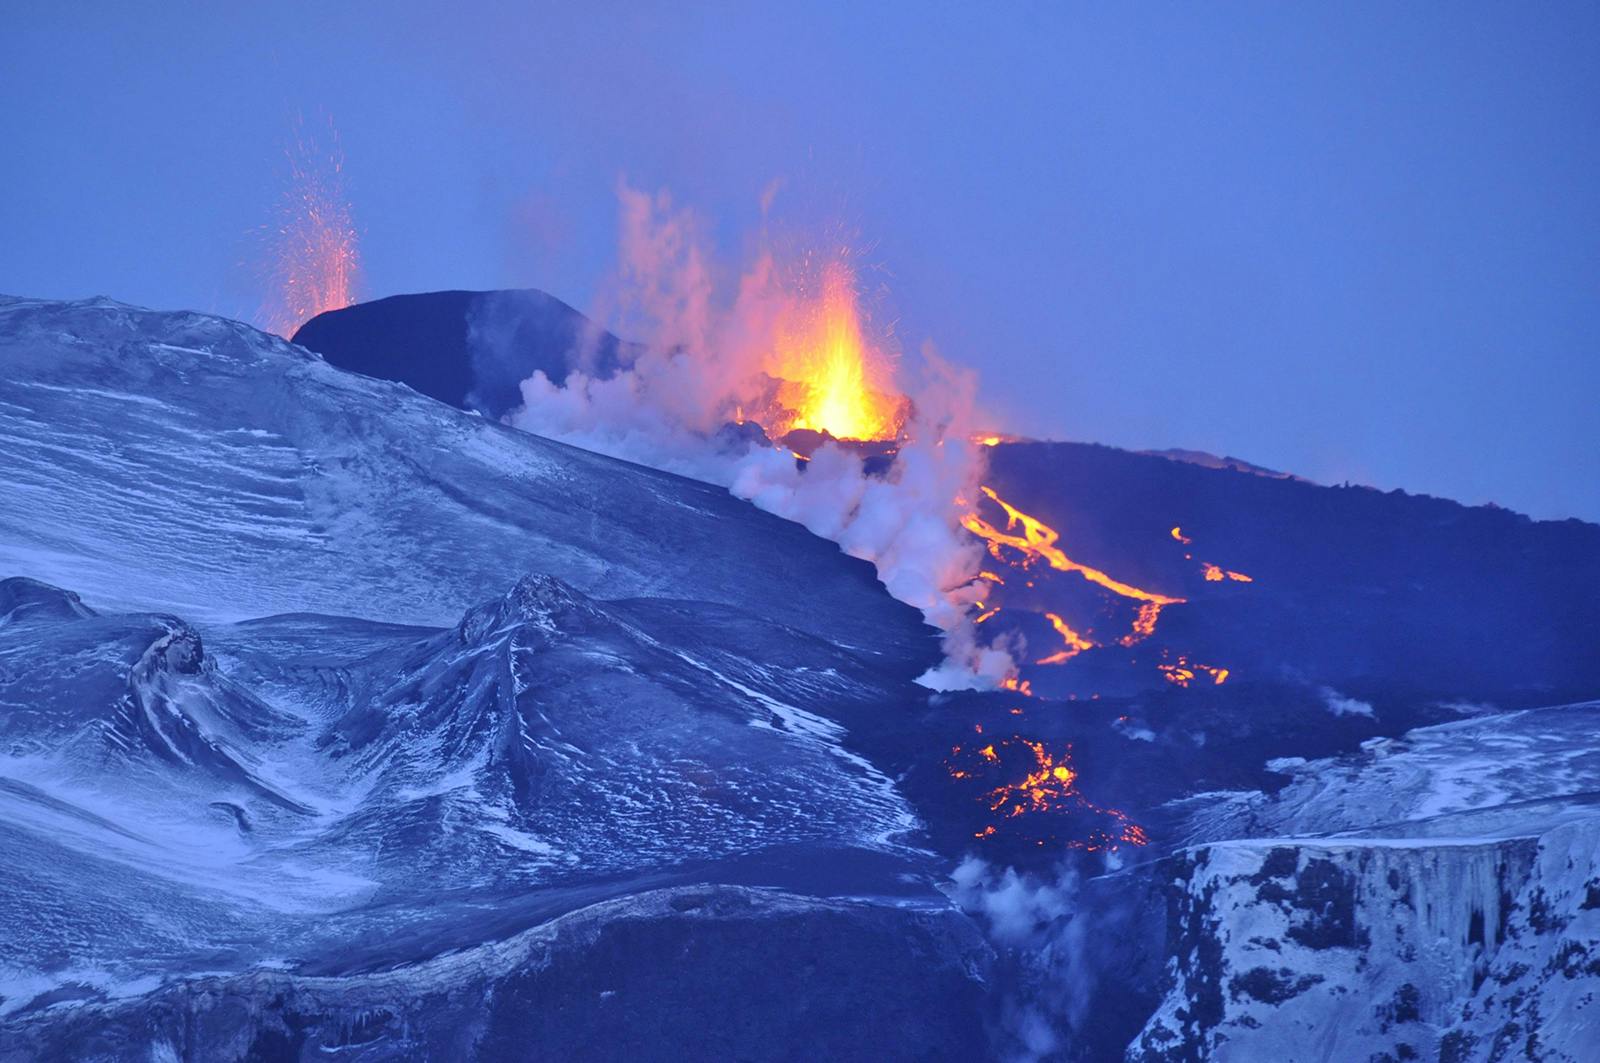 Eyjafjallajokull volcano